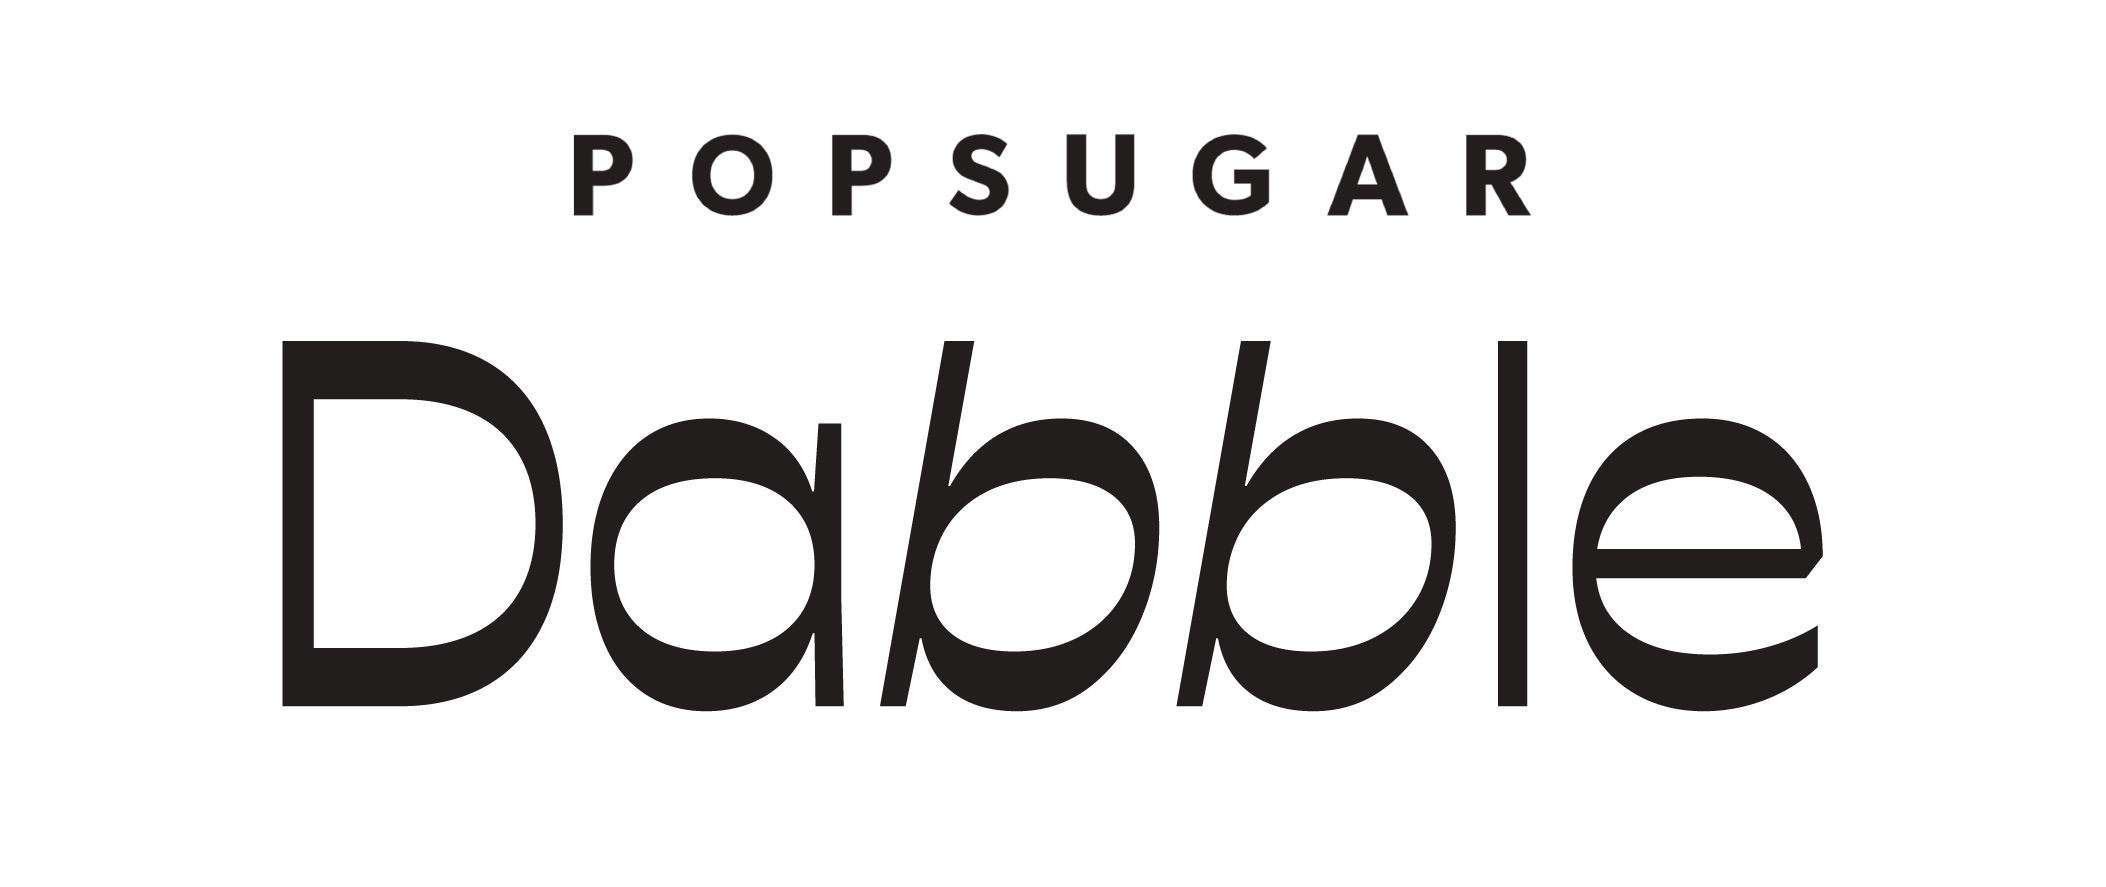 Dabble Popsugar logo